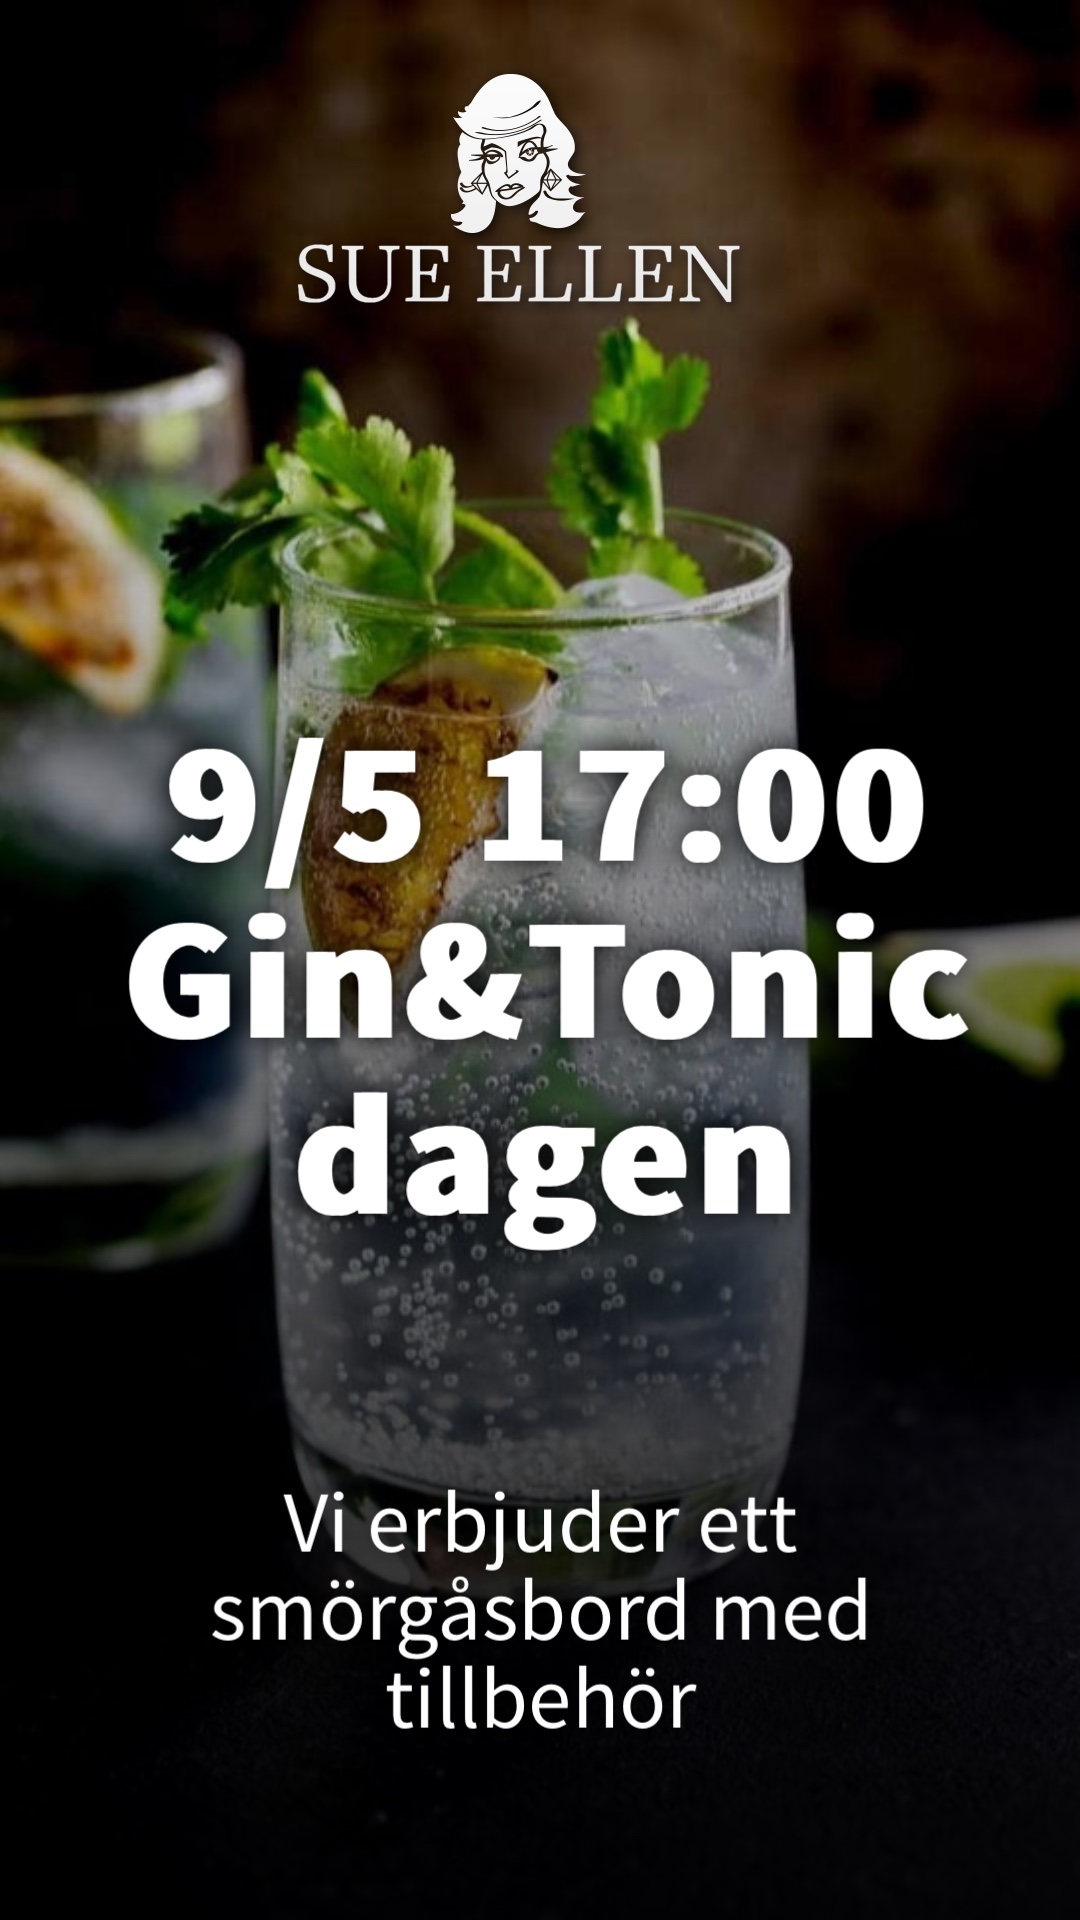 #Font #Drink #Photo caption #Soil #Cocktail garnish #Mint julep